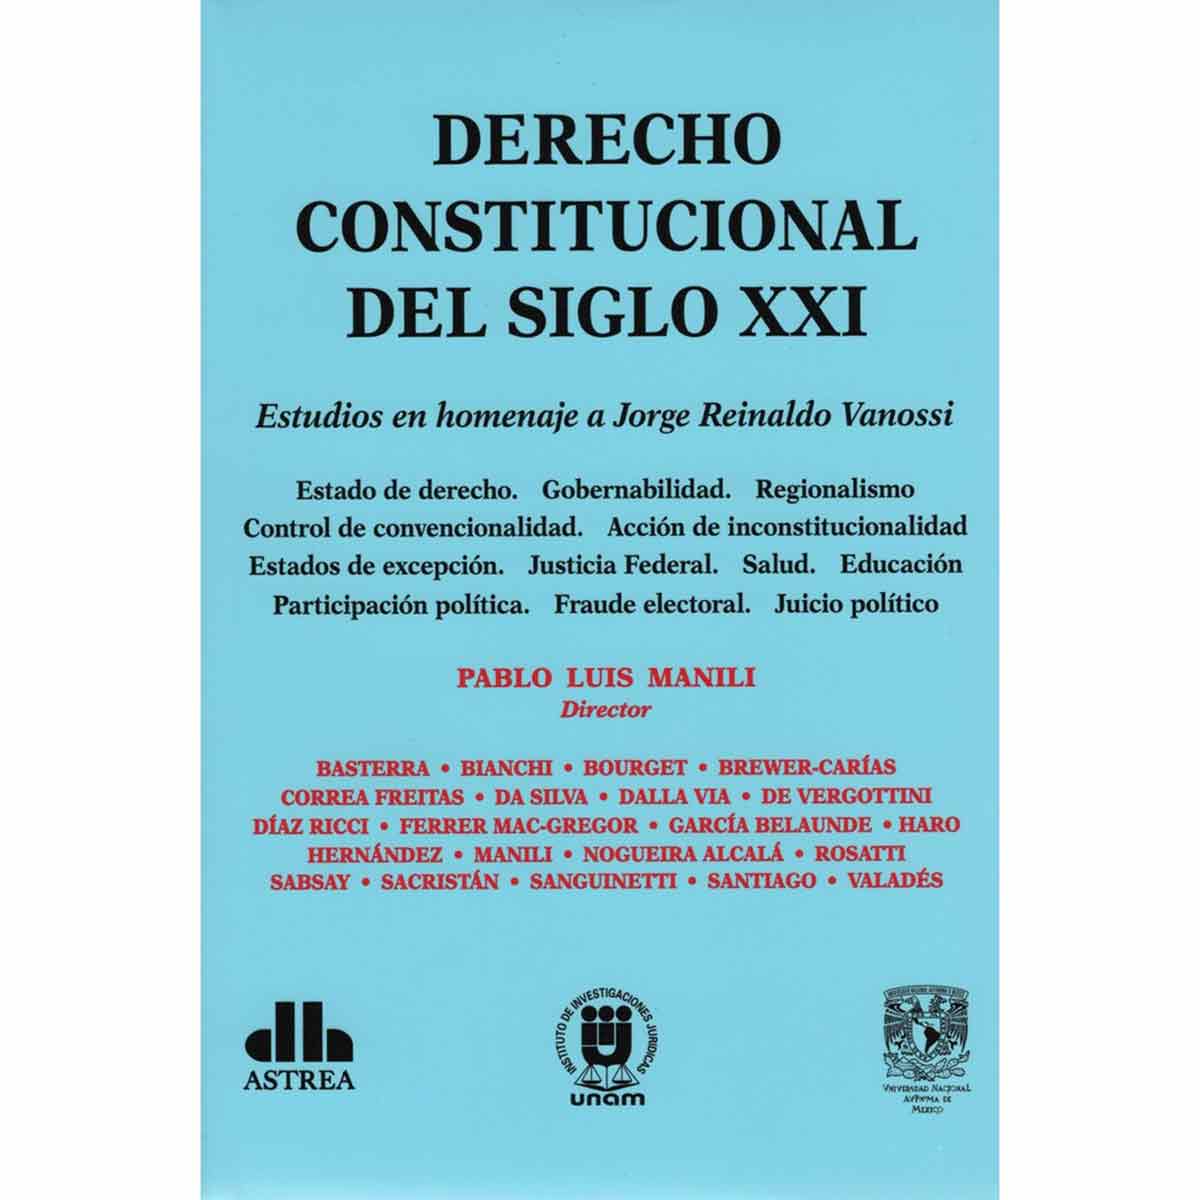 DERECHO CONSTITUCIONAL DEL SIGLO XXI. ESTUDIOS EN HOMENAJE A JORGE REINALDO VANOSSI